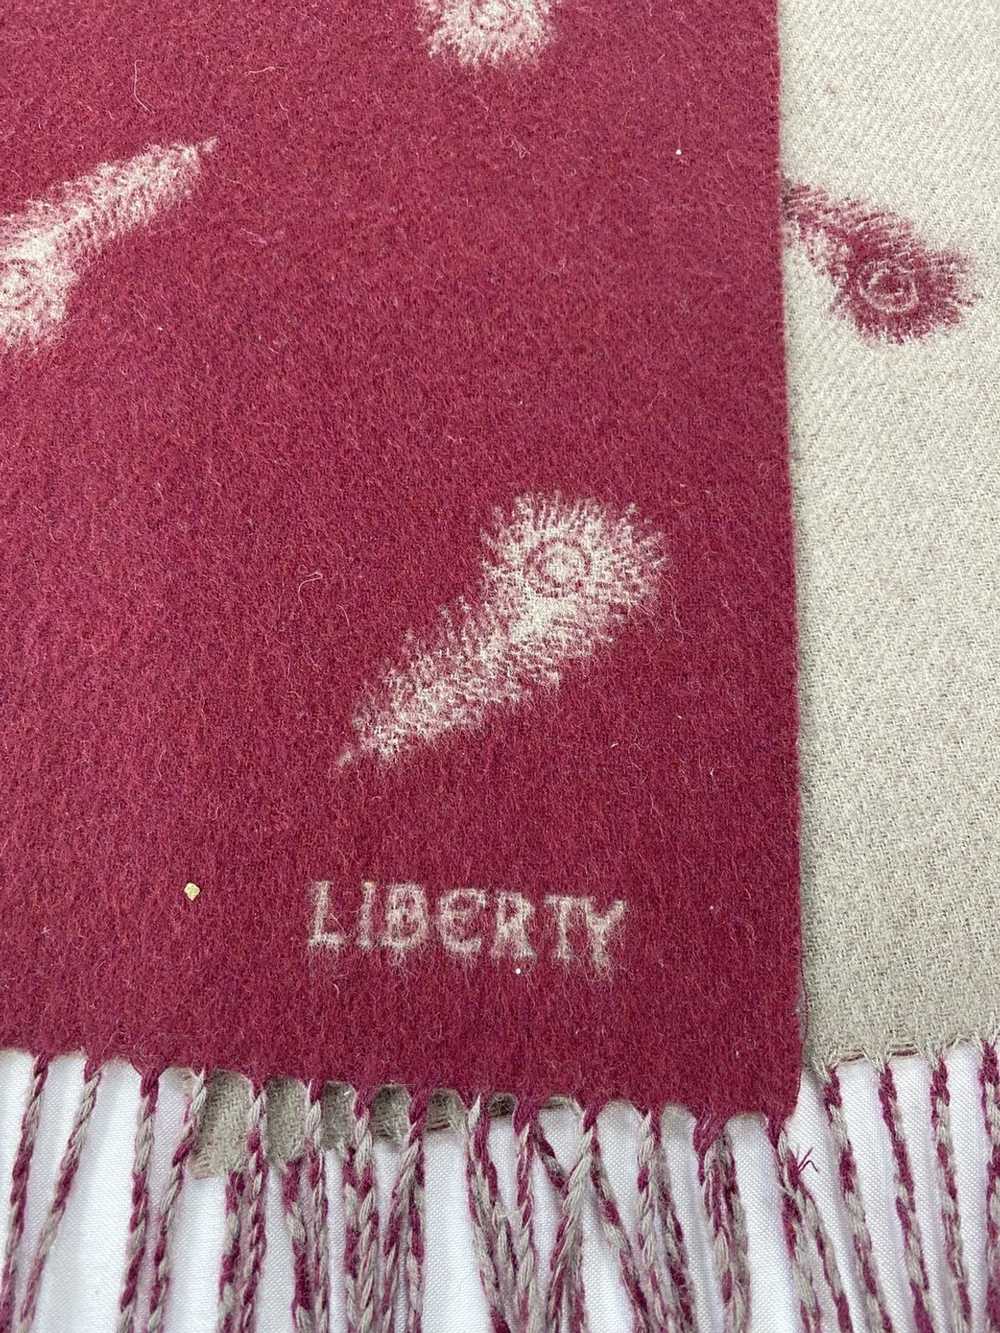 Liberty × Other Liberty Scarf/Muffler -T002 - image 4